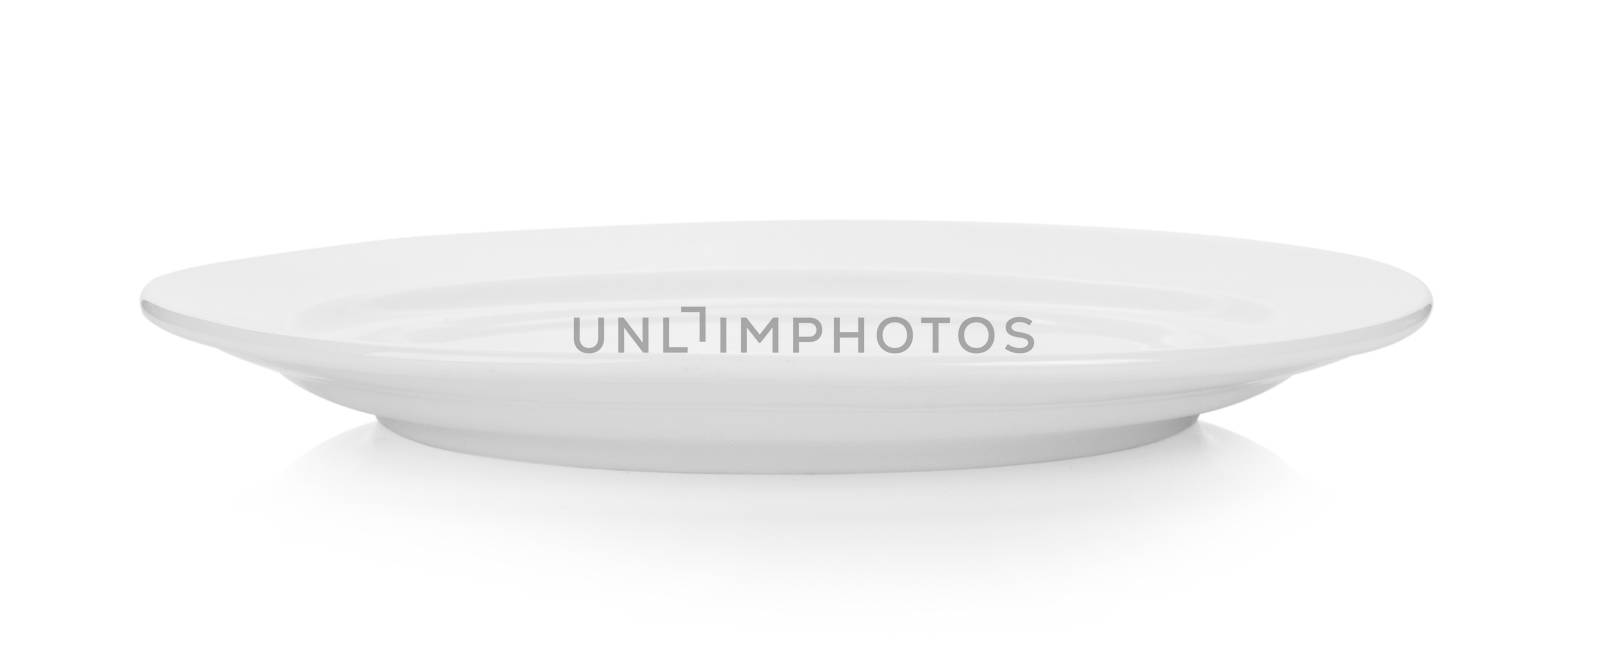 ceramic white plate isolated on white background